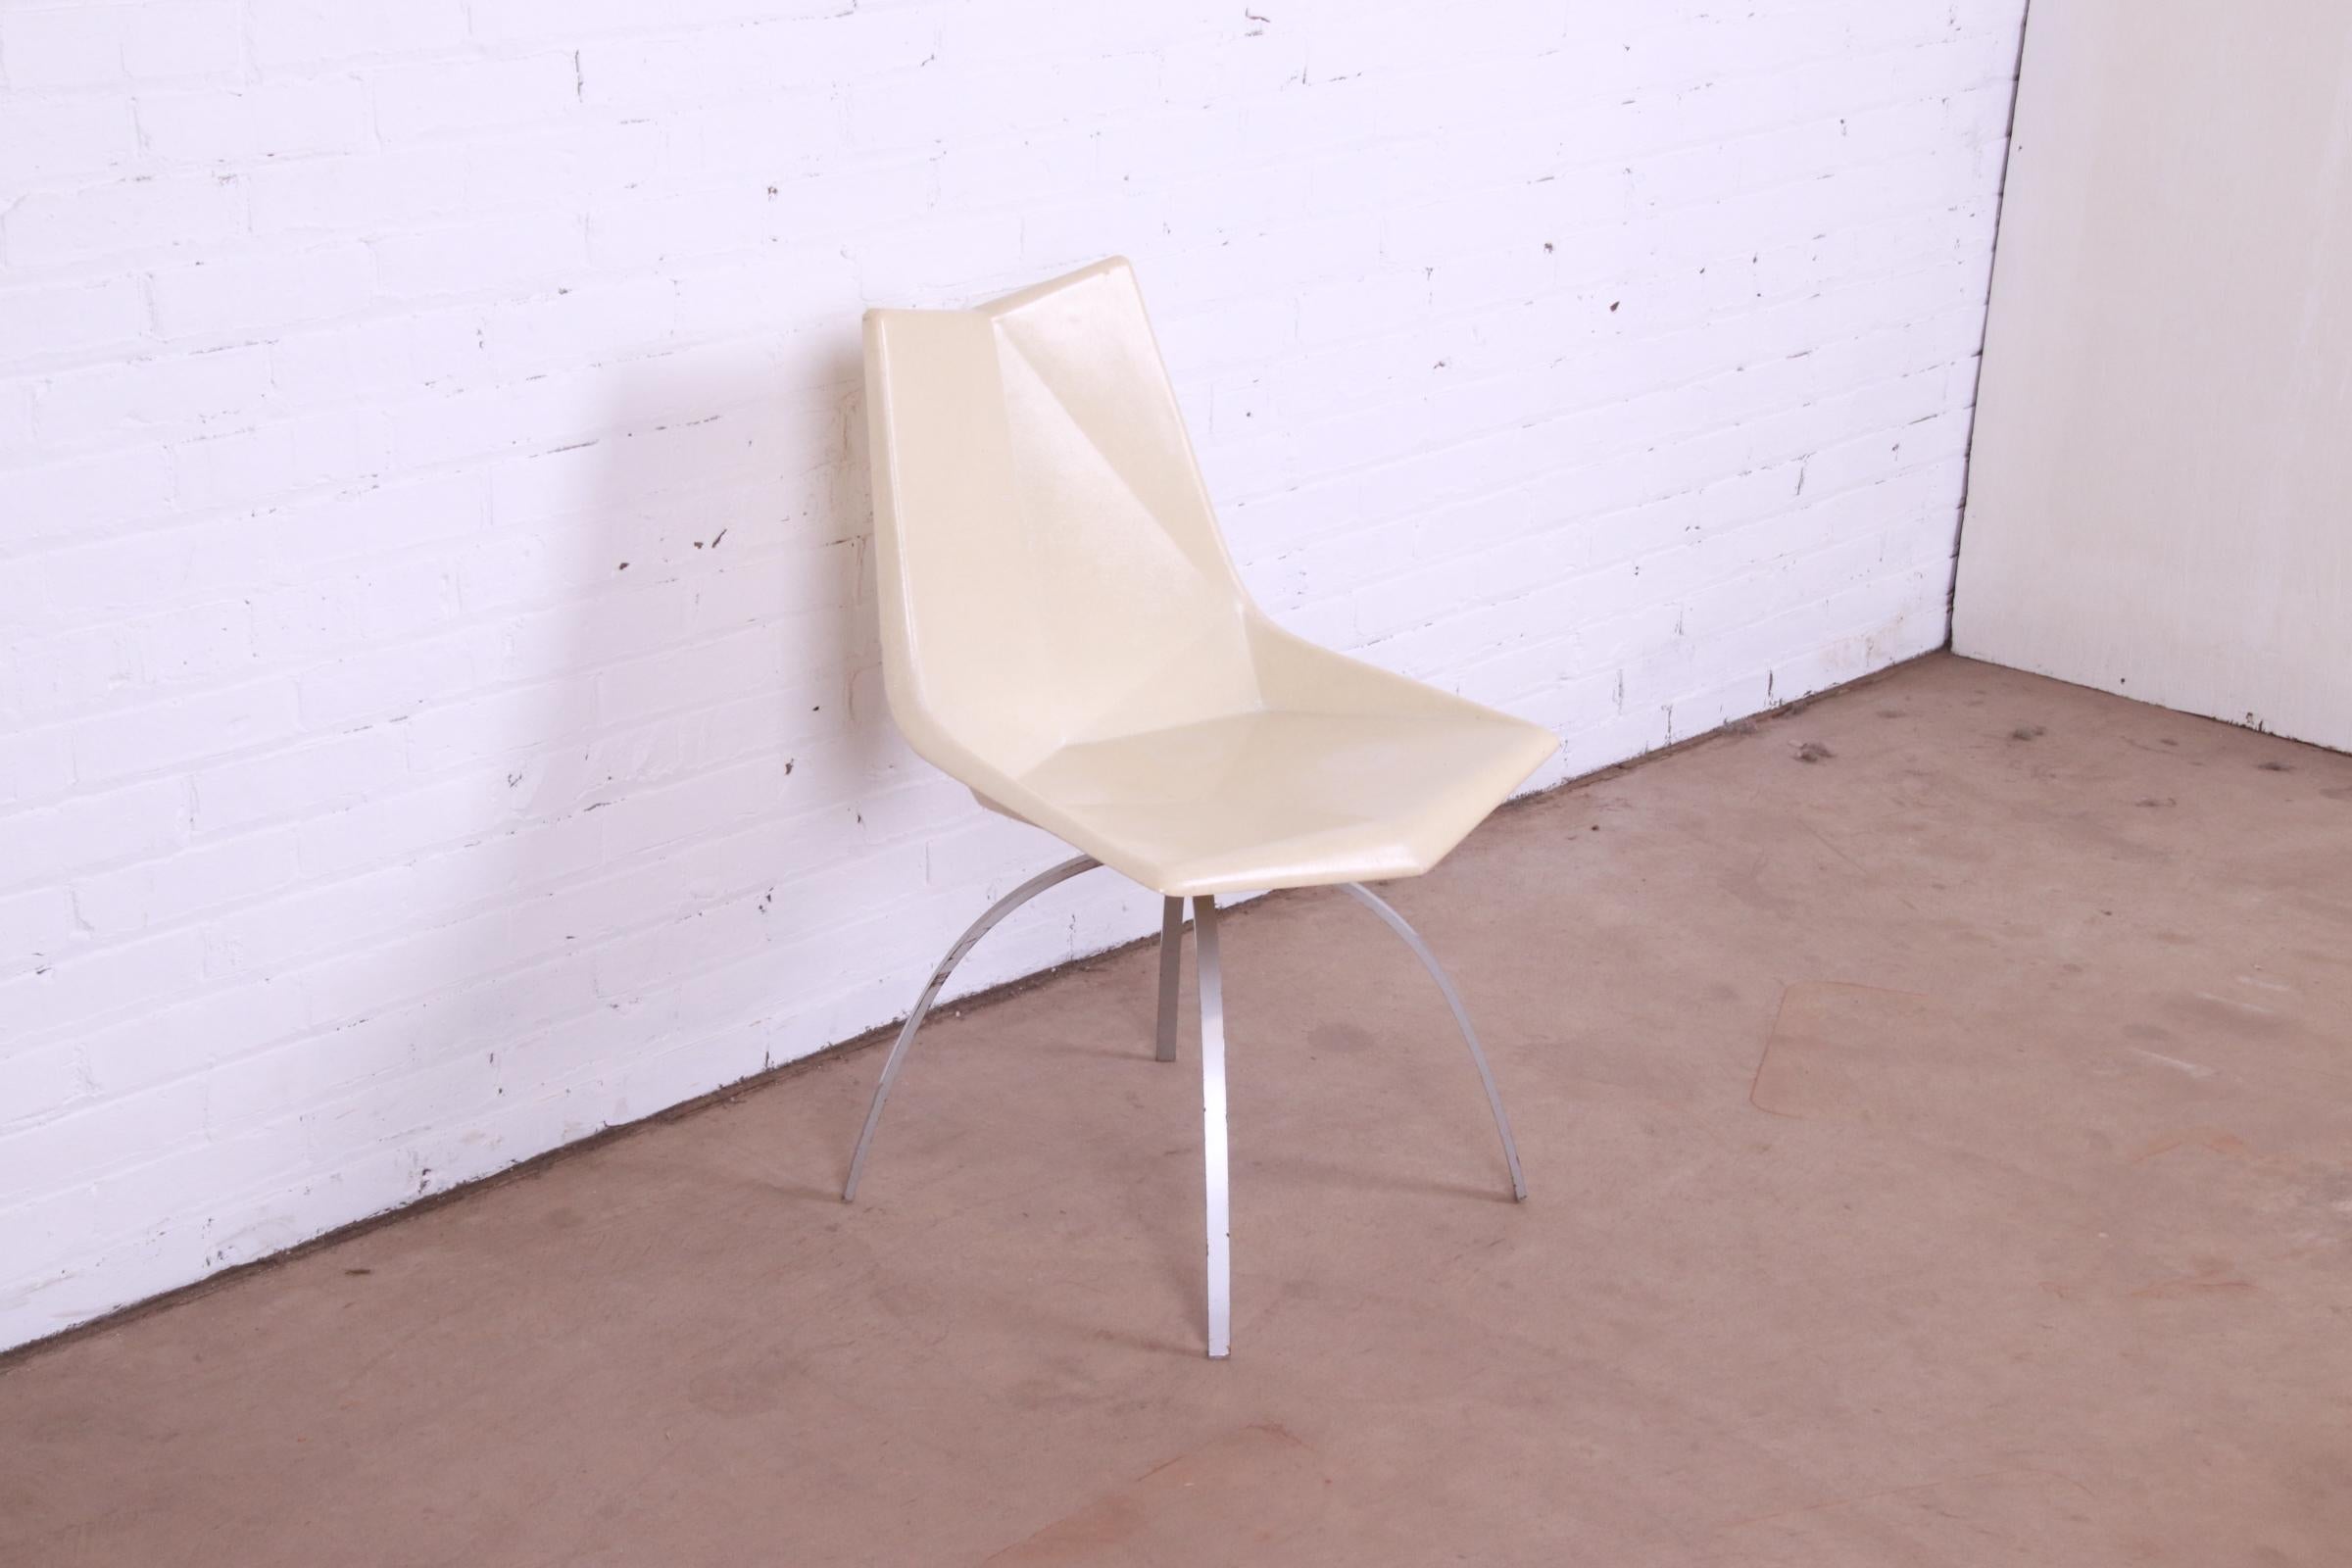 Steel Paul McCobb Mid-Century Modern Fiberglass Origami Chair on Spider Base, 1950s For Sale